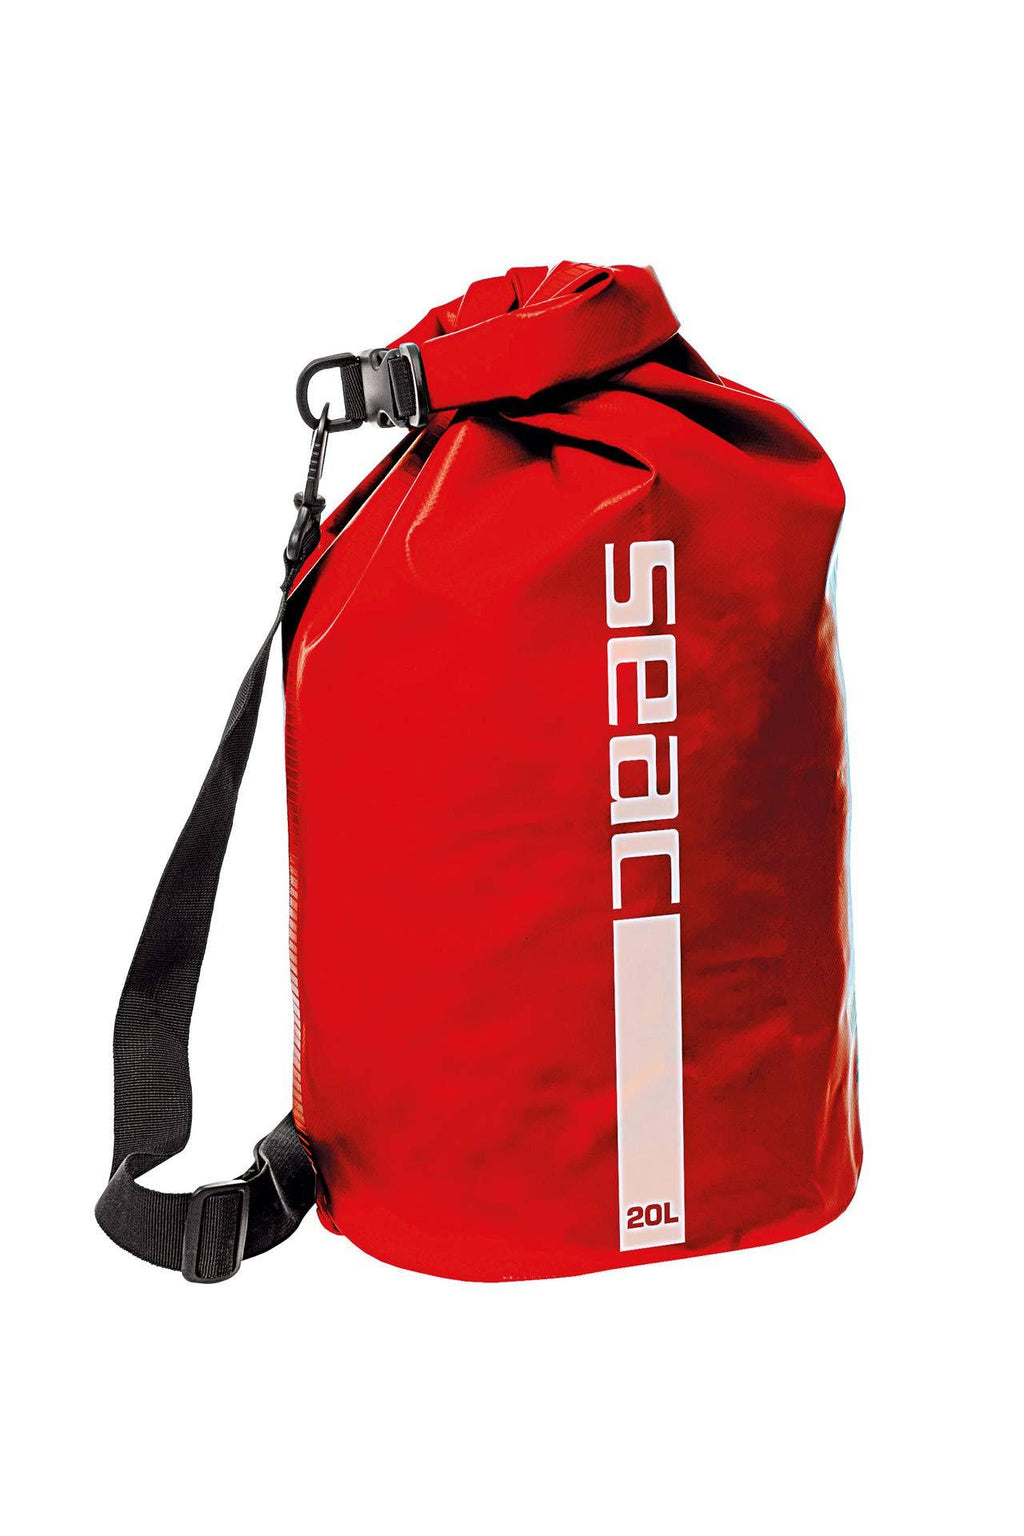 [AUSTRALIA] - SEAC Dry Bag 20L Red X-Large 